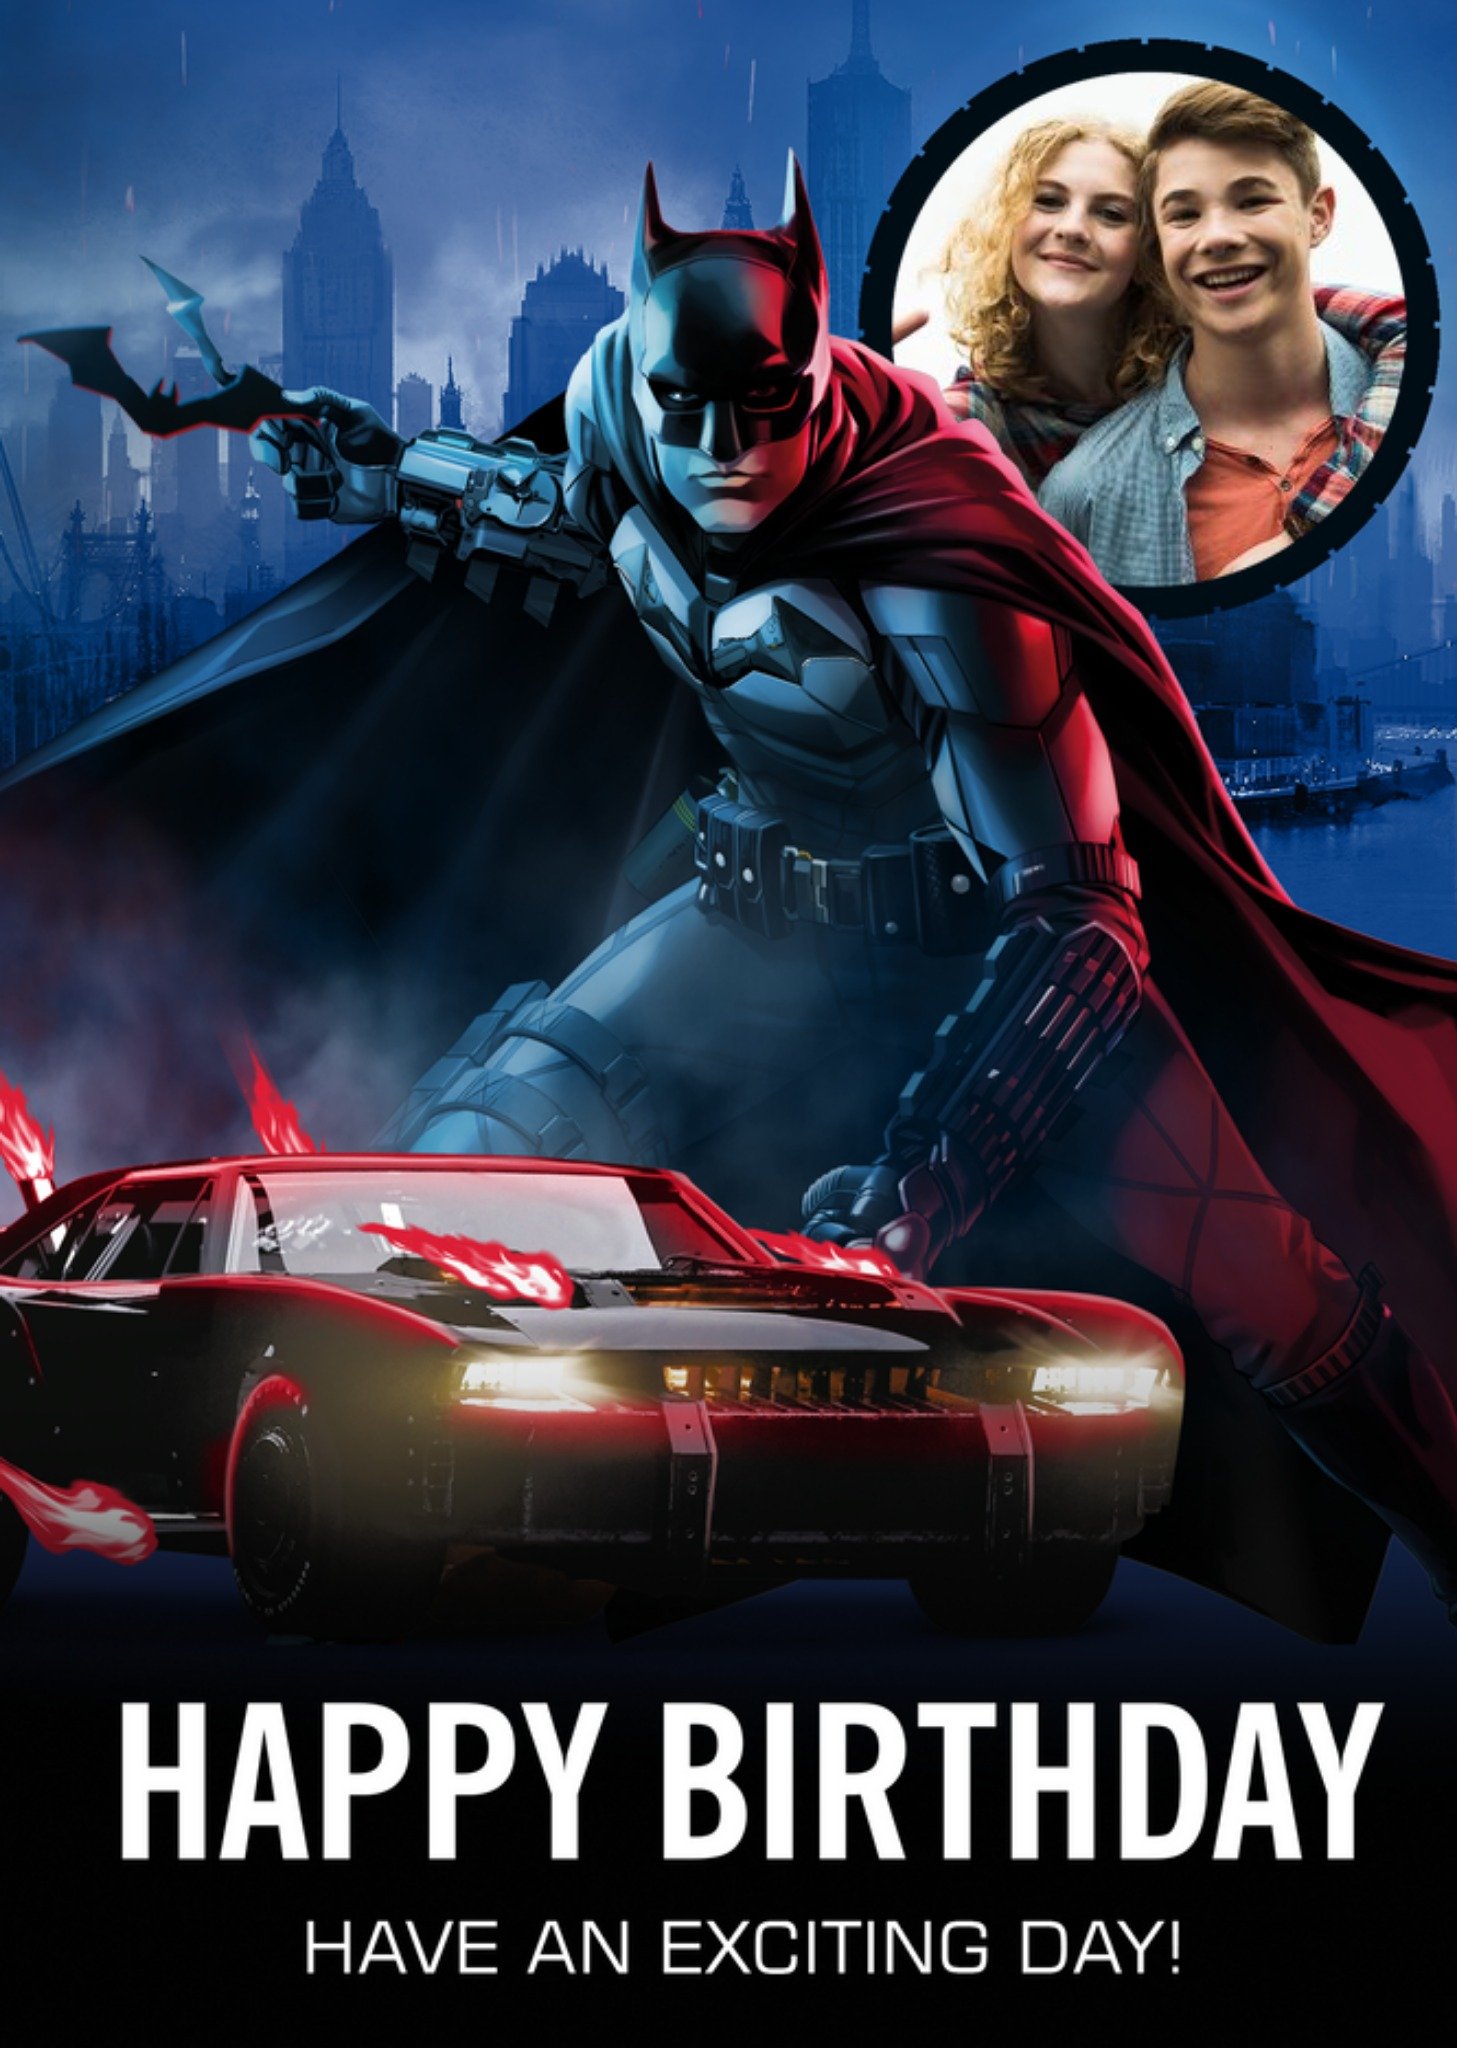 The Batman Movie Exciting Day Photo Upload Birthday Card Ecard